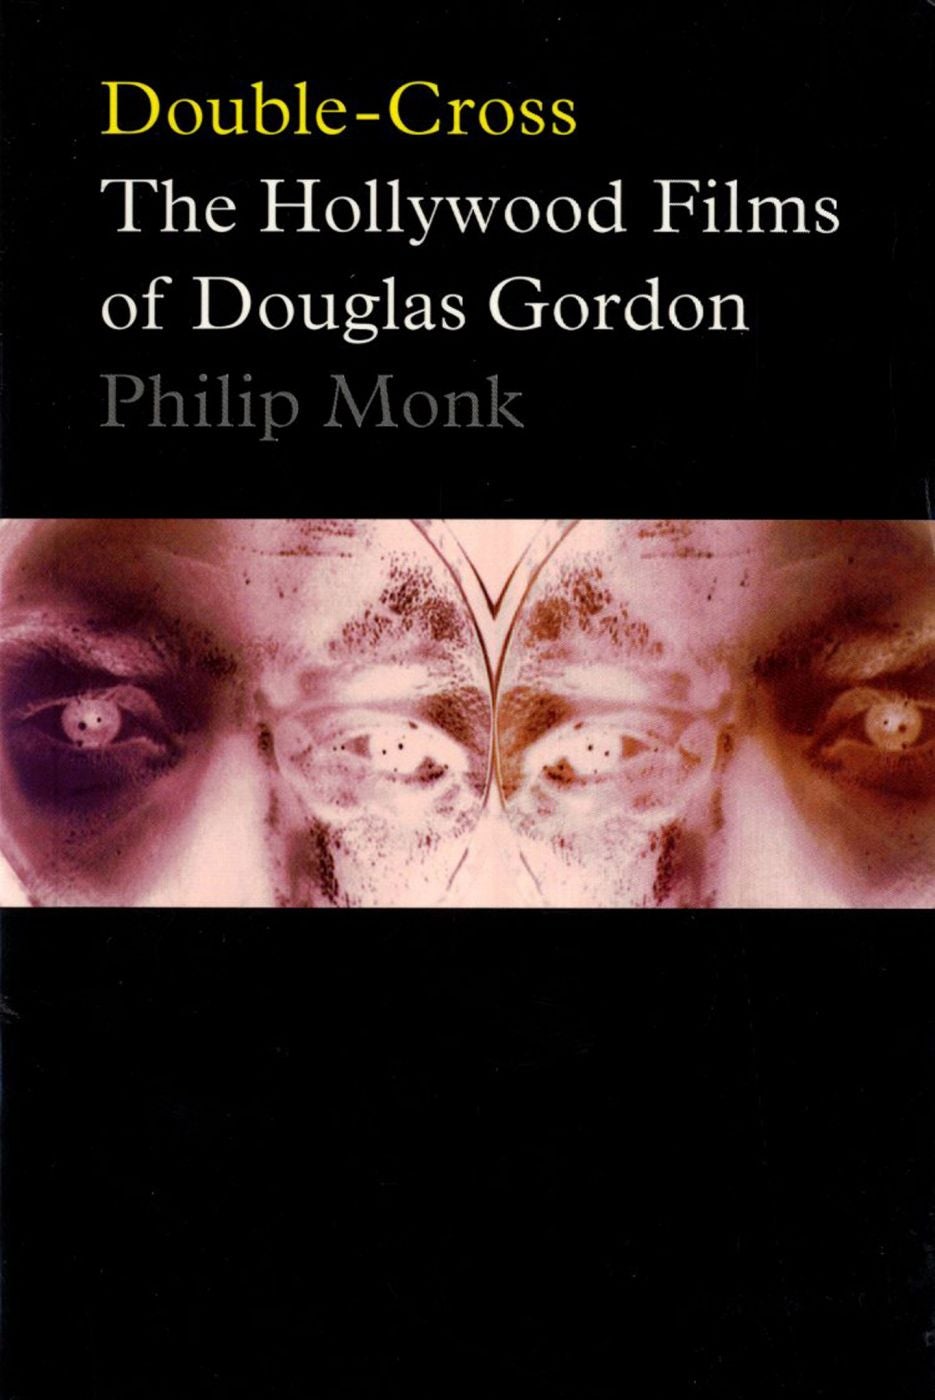 Double-Cross: The Hollywood Films of Douglas Gordon